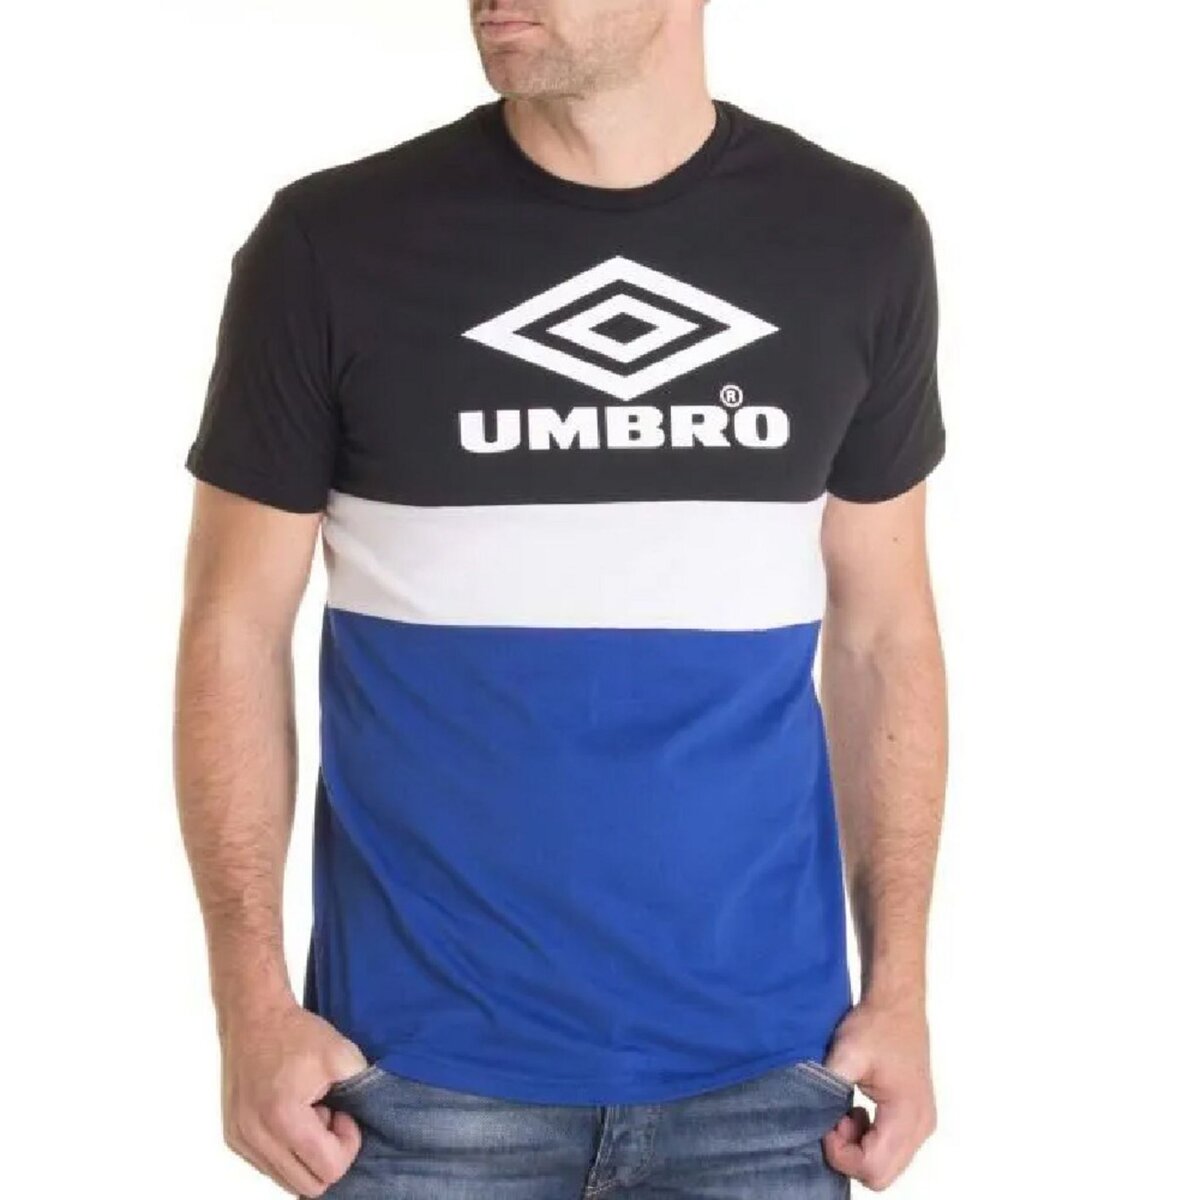 UMBRO T-shirt Noir/BleuHomme Umbro Street AD